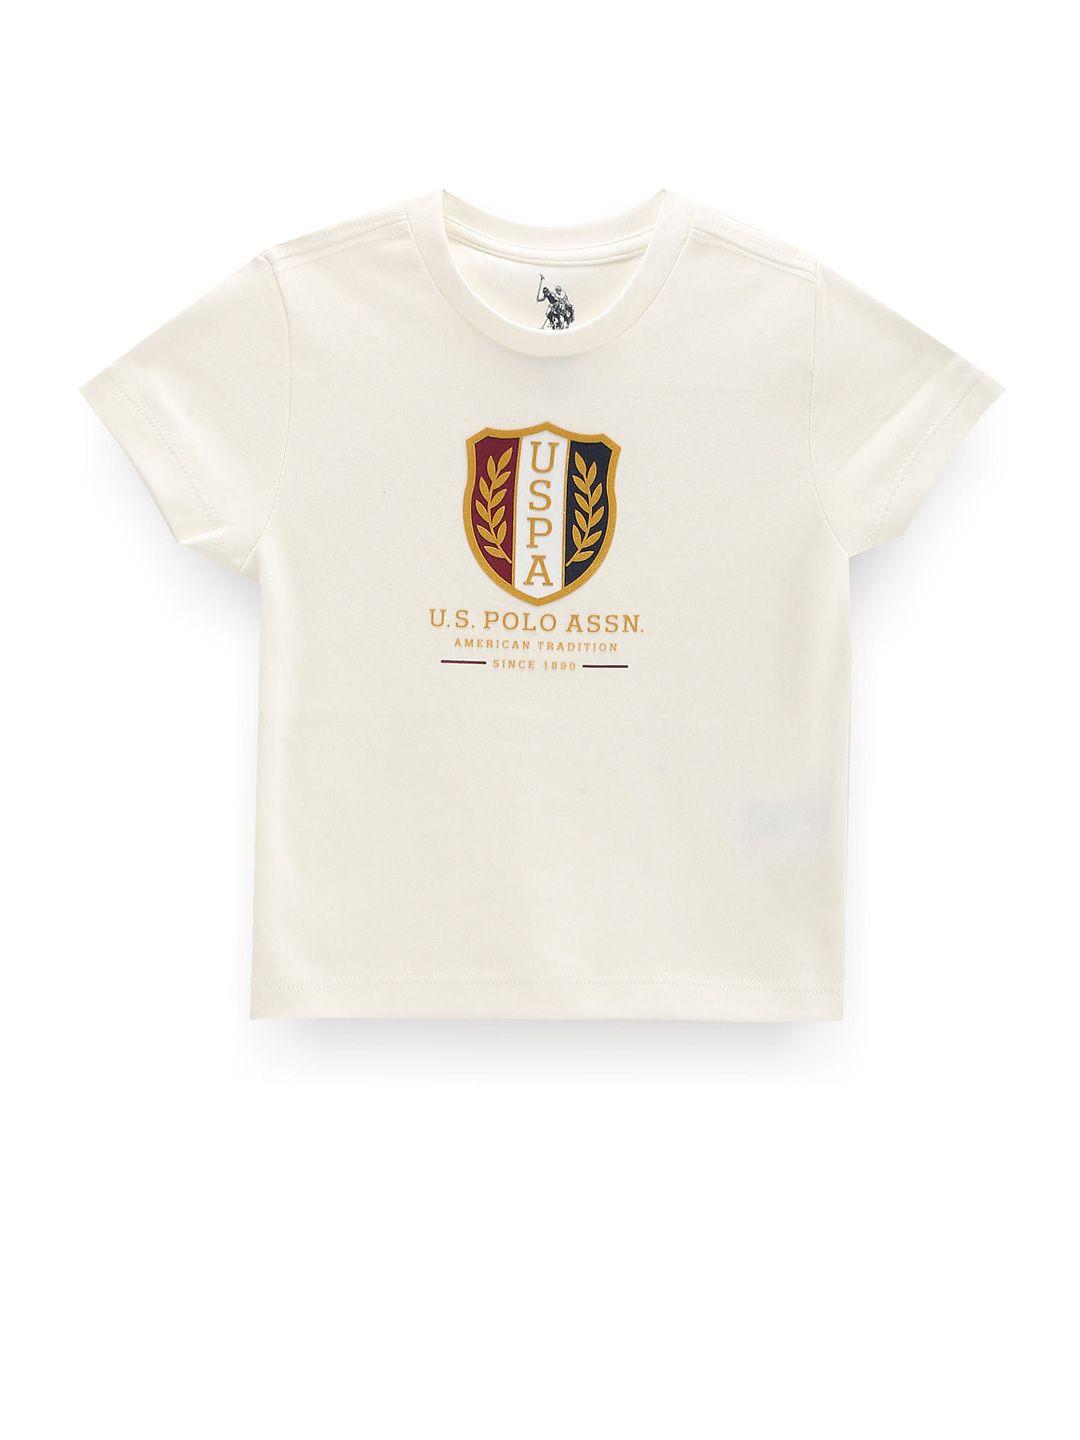 u.s. polo assn. kids boys brand logo printed round neck cotton regular t-shirt